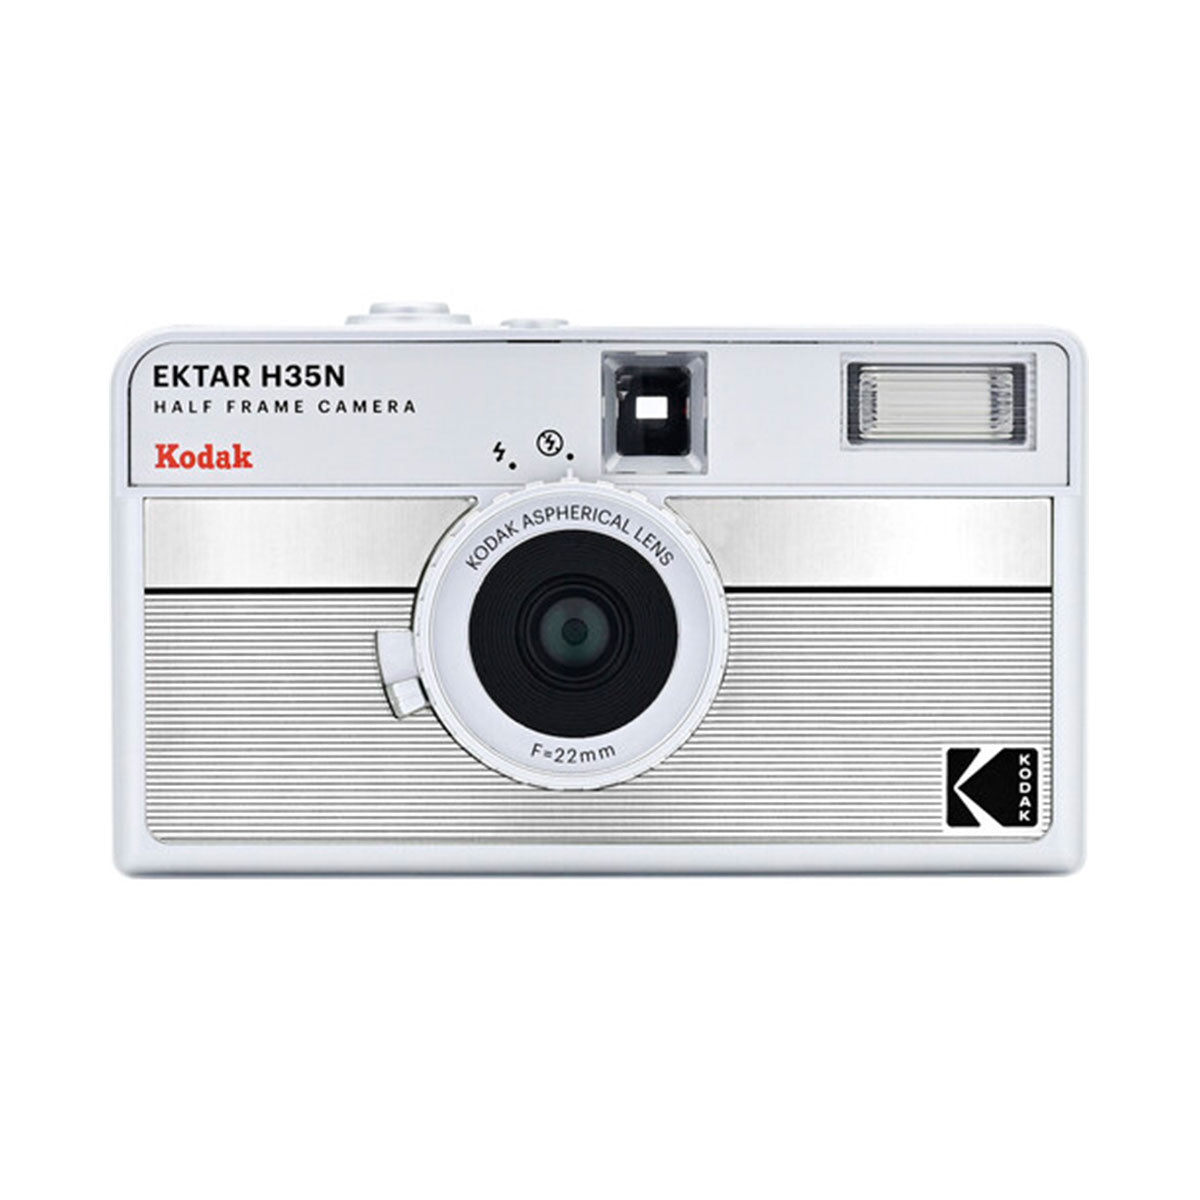 Kodak H35N 1/2 Frame Film Camera - Silver